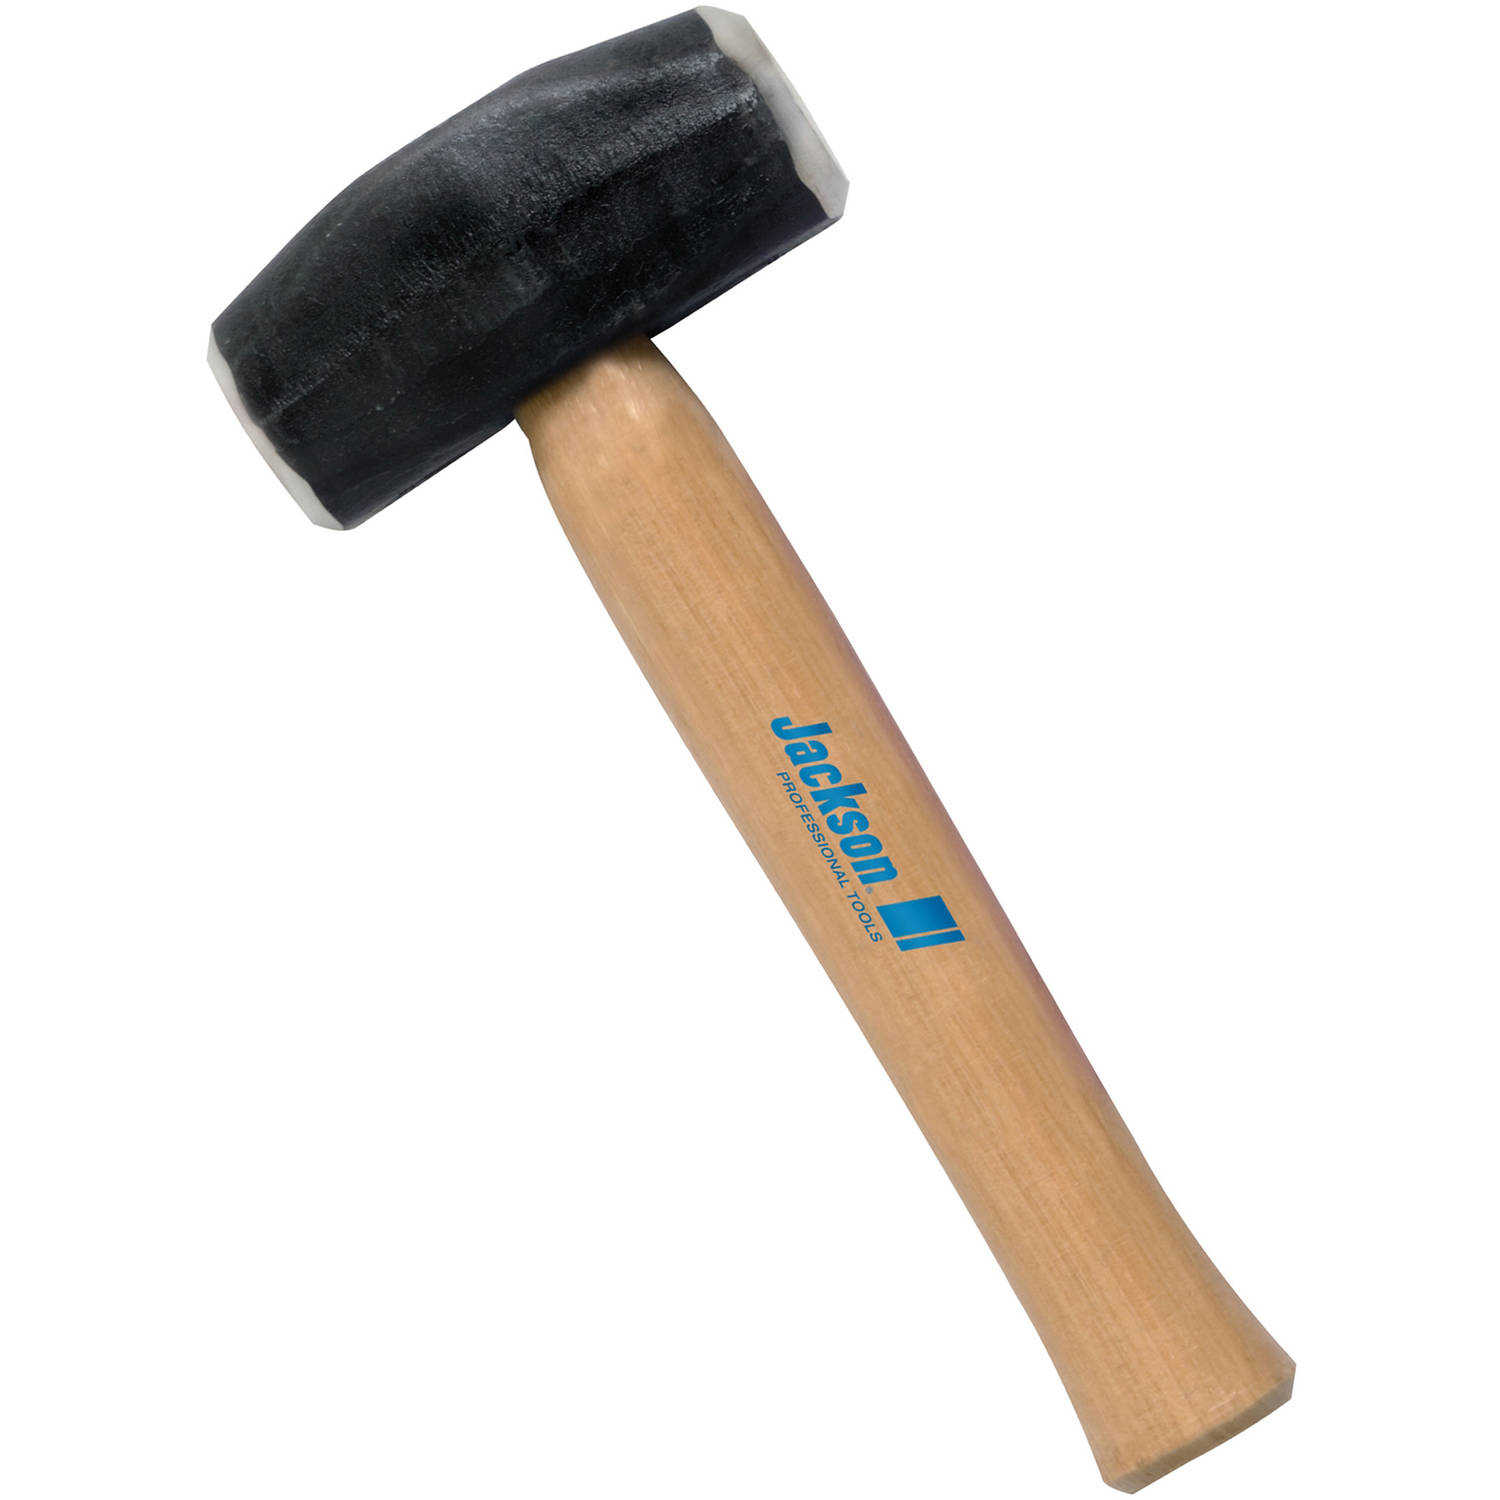 Jackson 1196100 2 lb Hand Drill Hammer 10-1/2' wood Handle